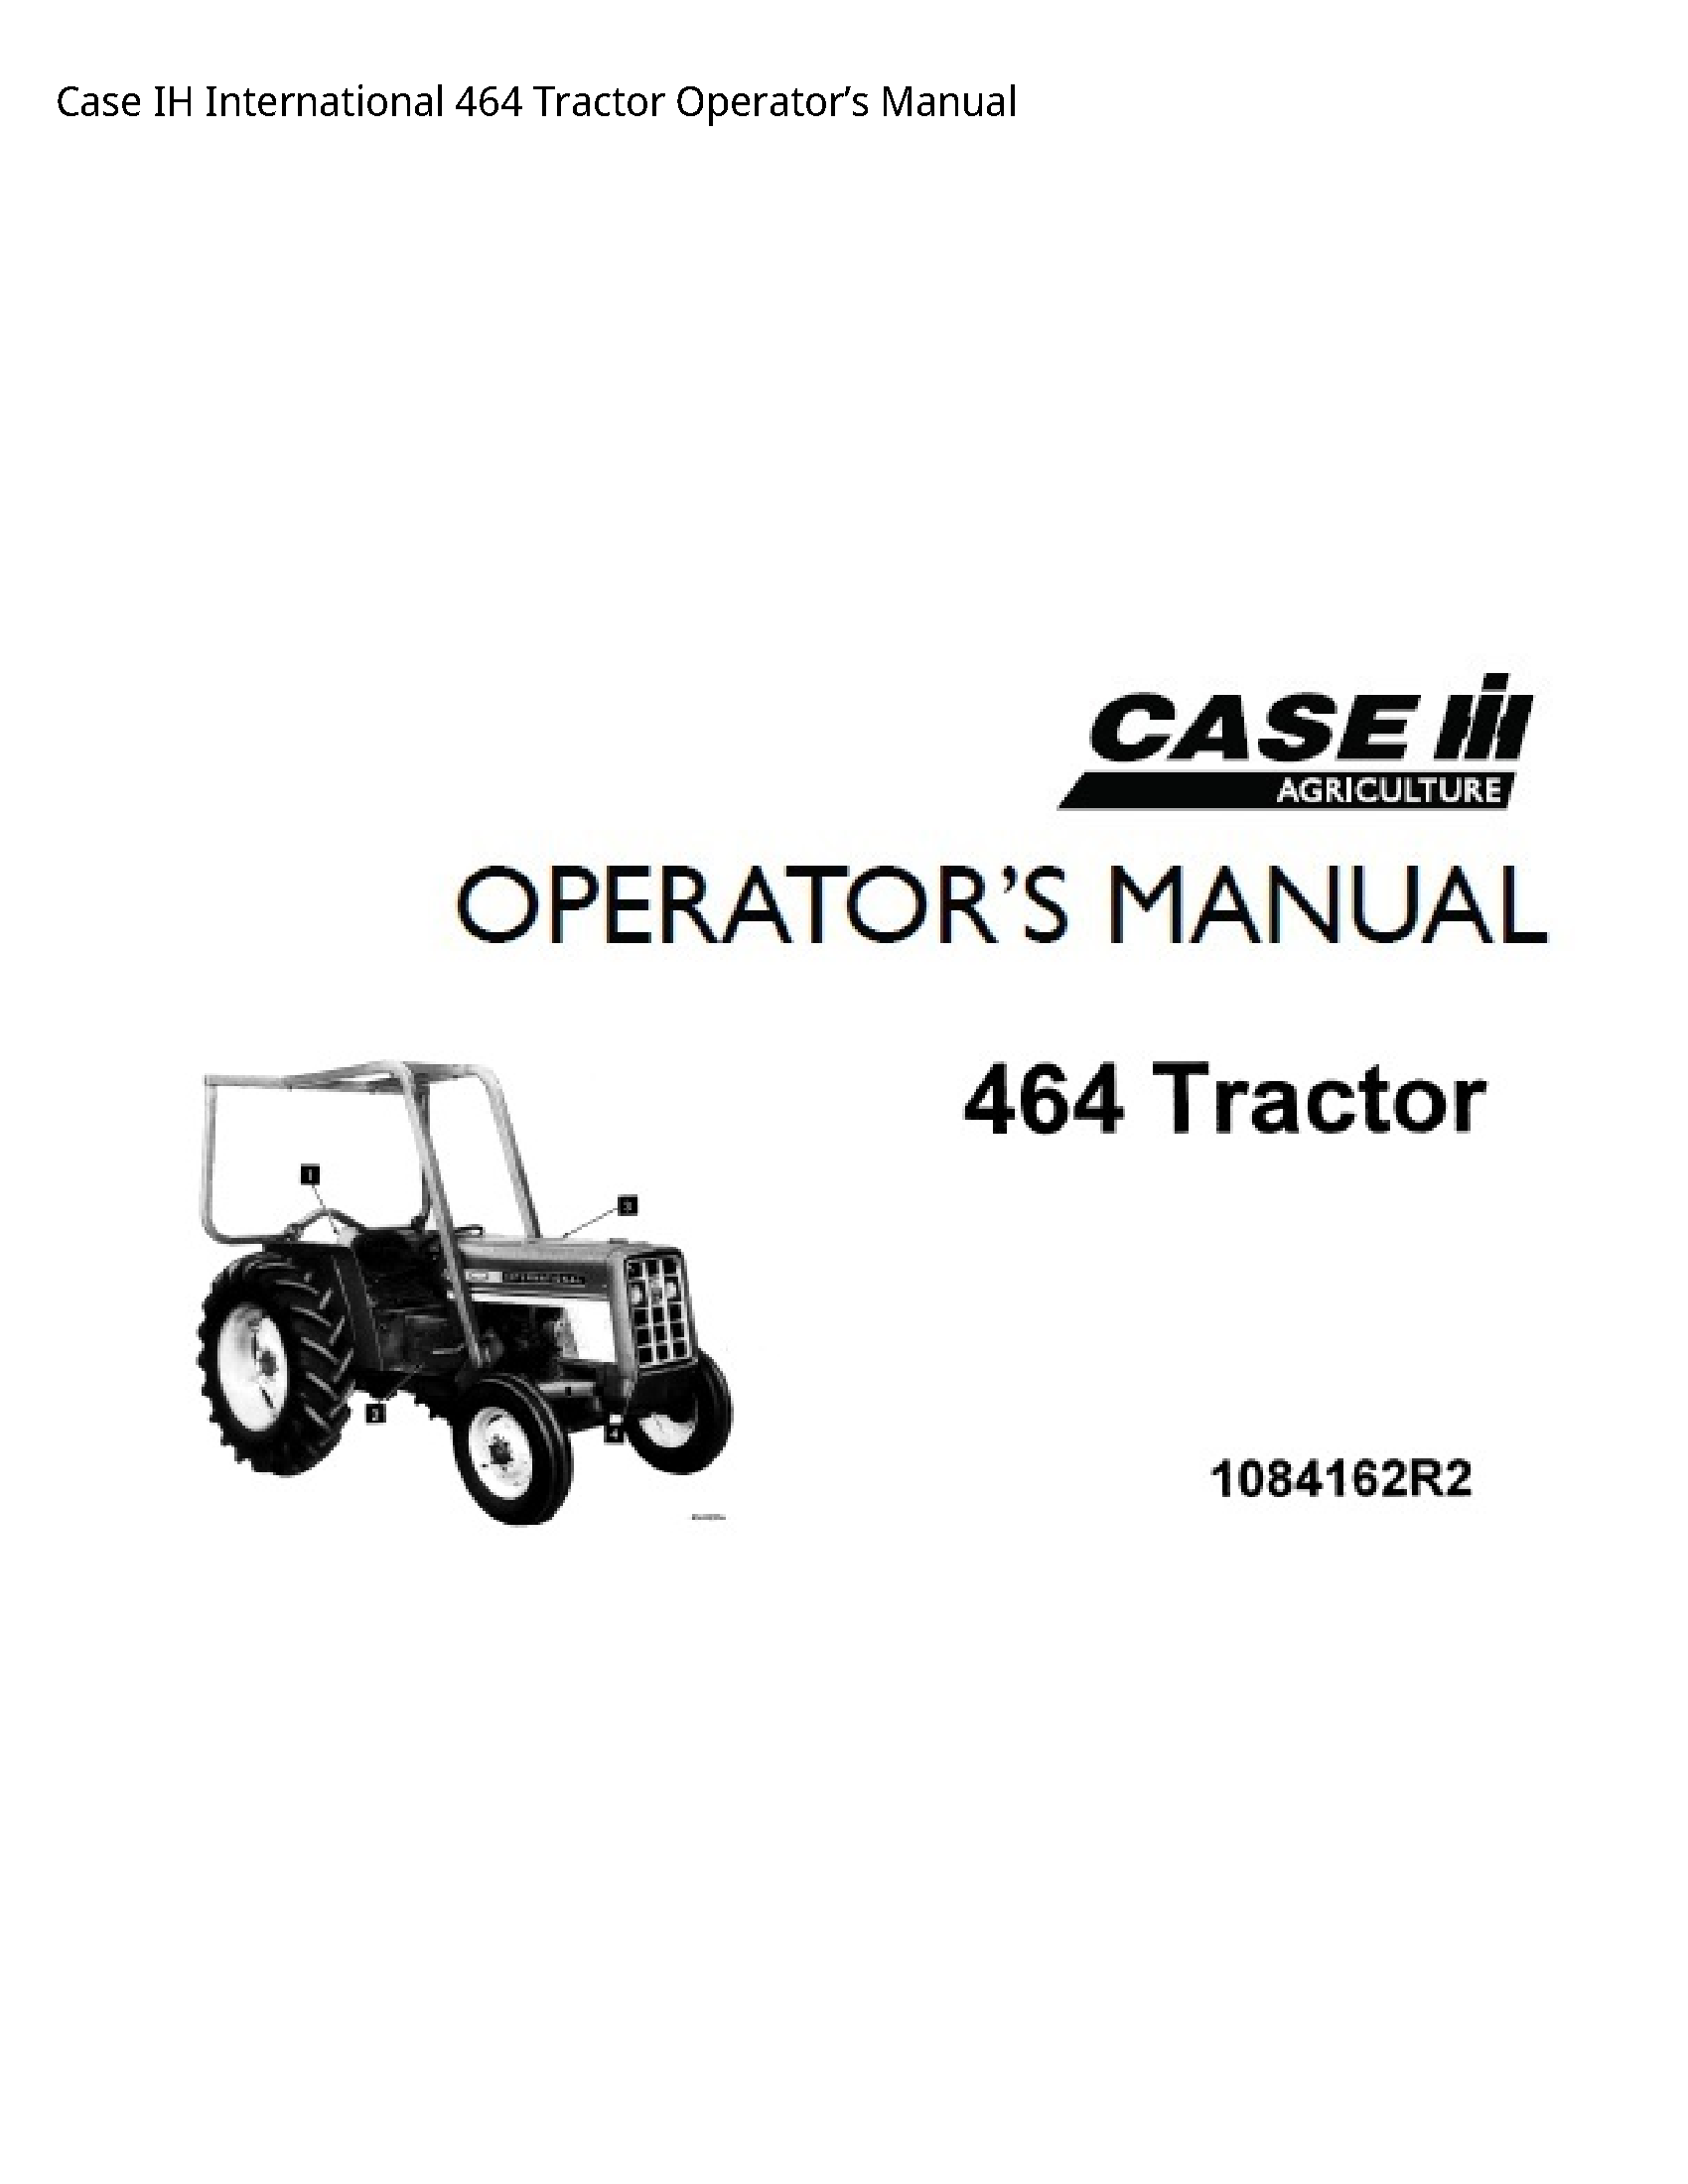 Case/Case IH 464 IH International Tractor Operator’s manual